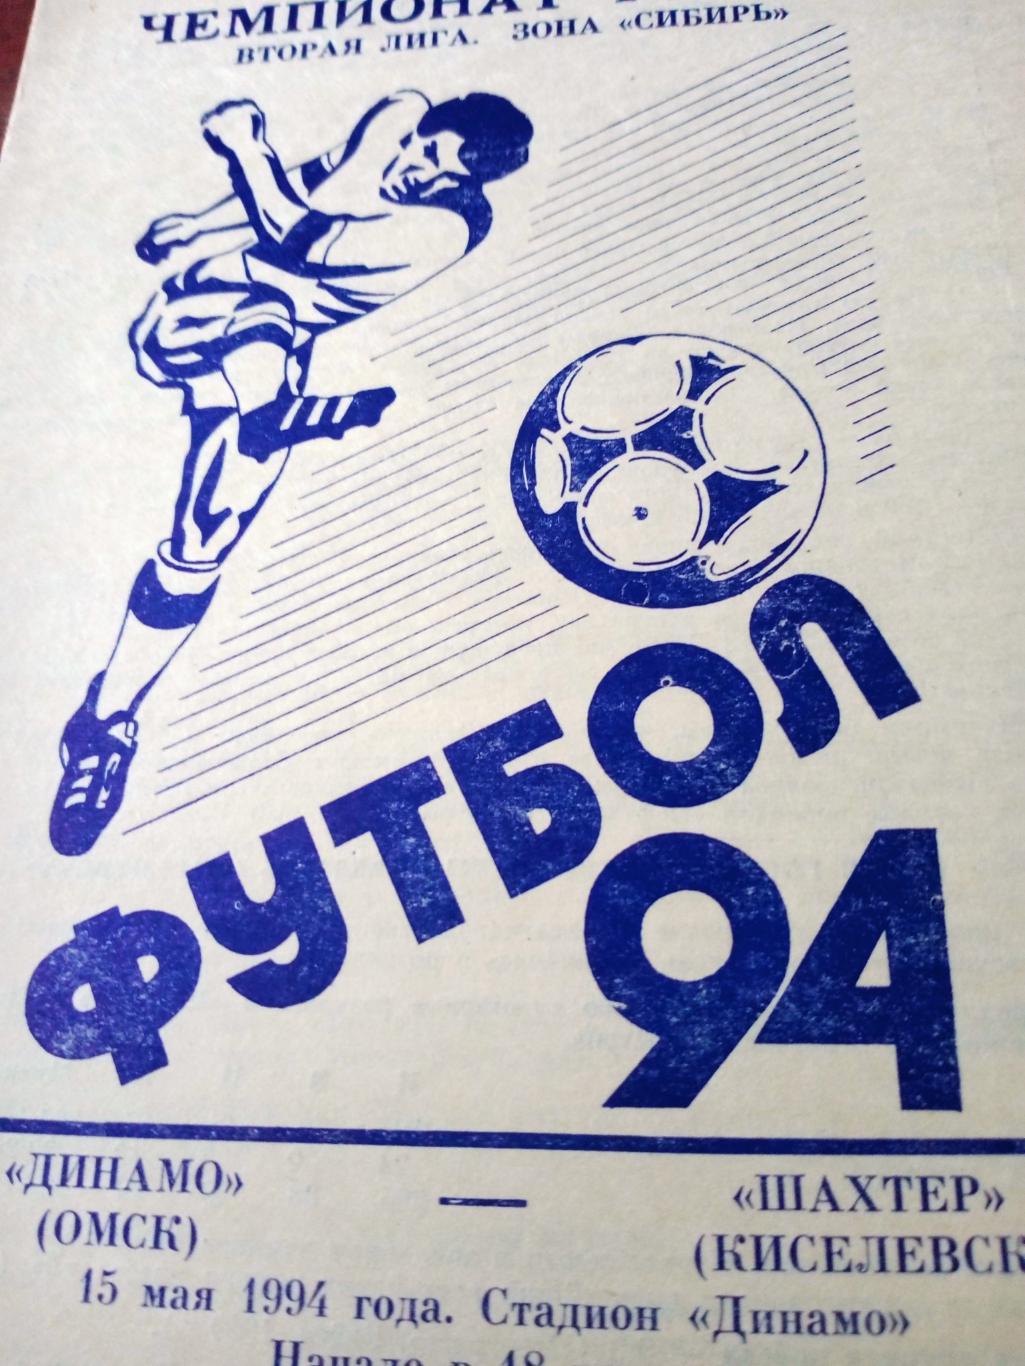 Динамо Омск - Шахтер Киселёвск. 15 мая 1994 год